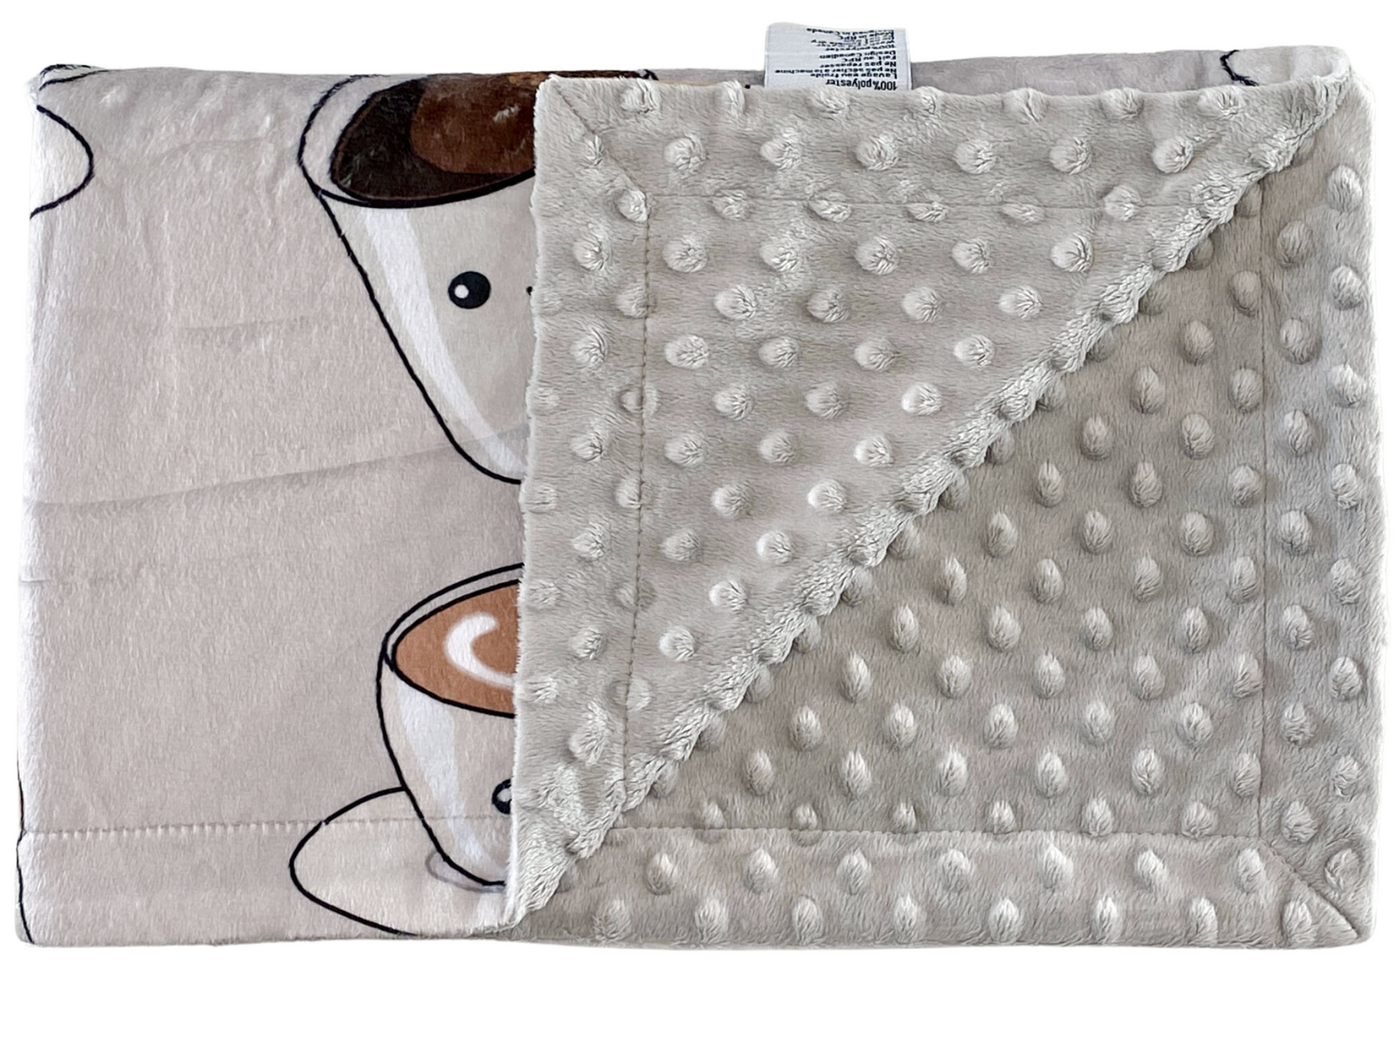 Medium blanket: Tipou Bébé Coffee Shop